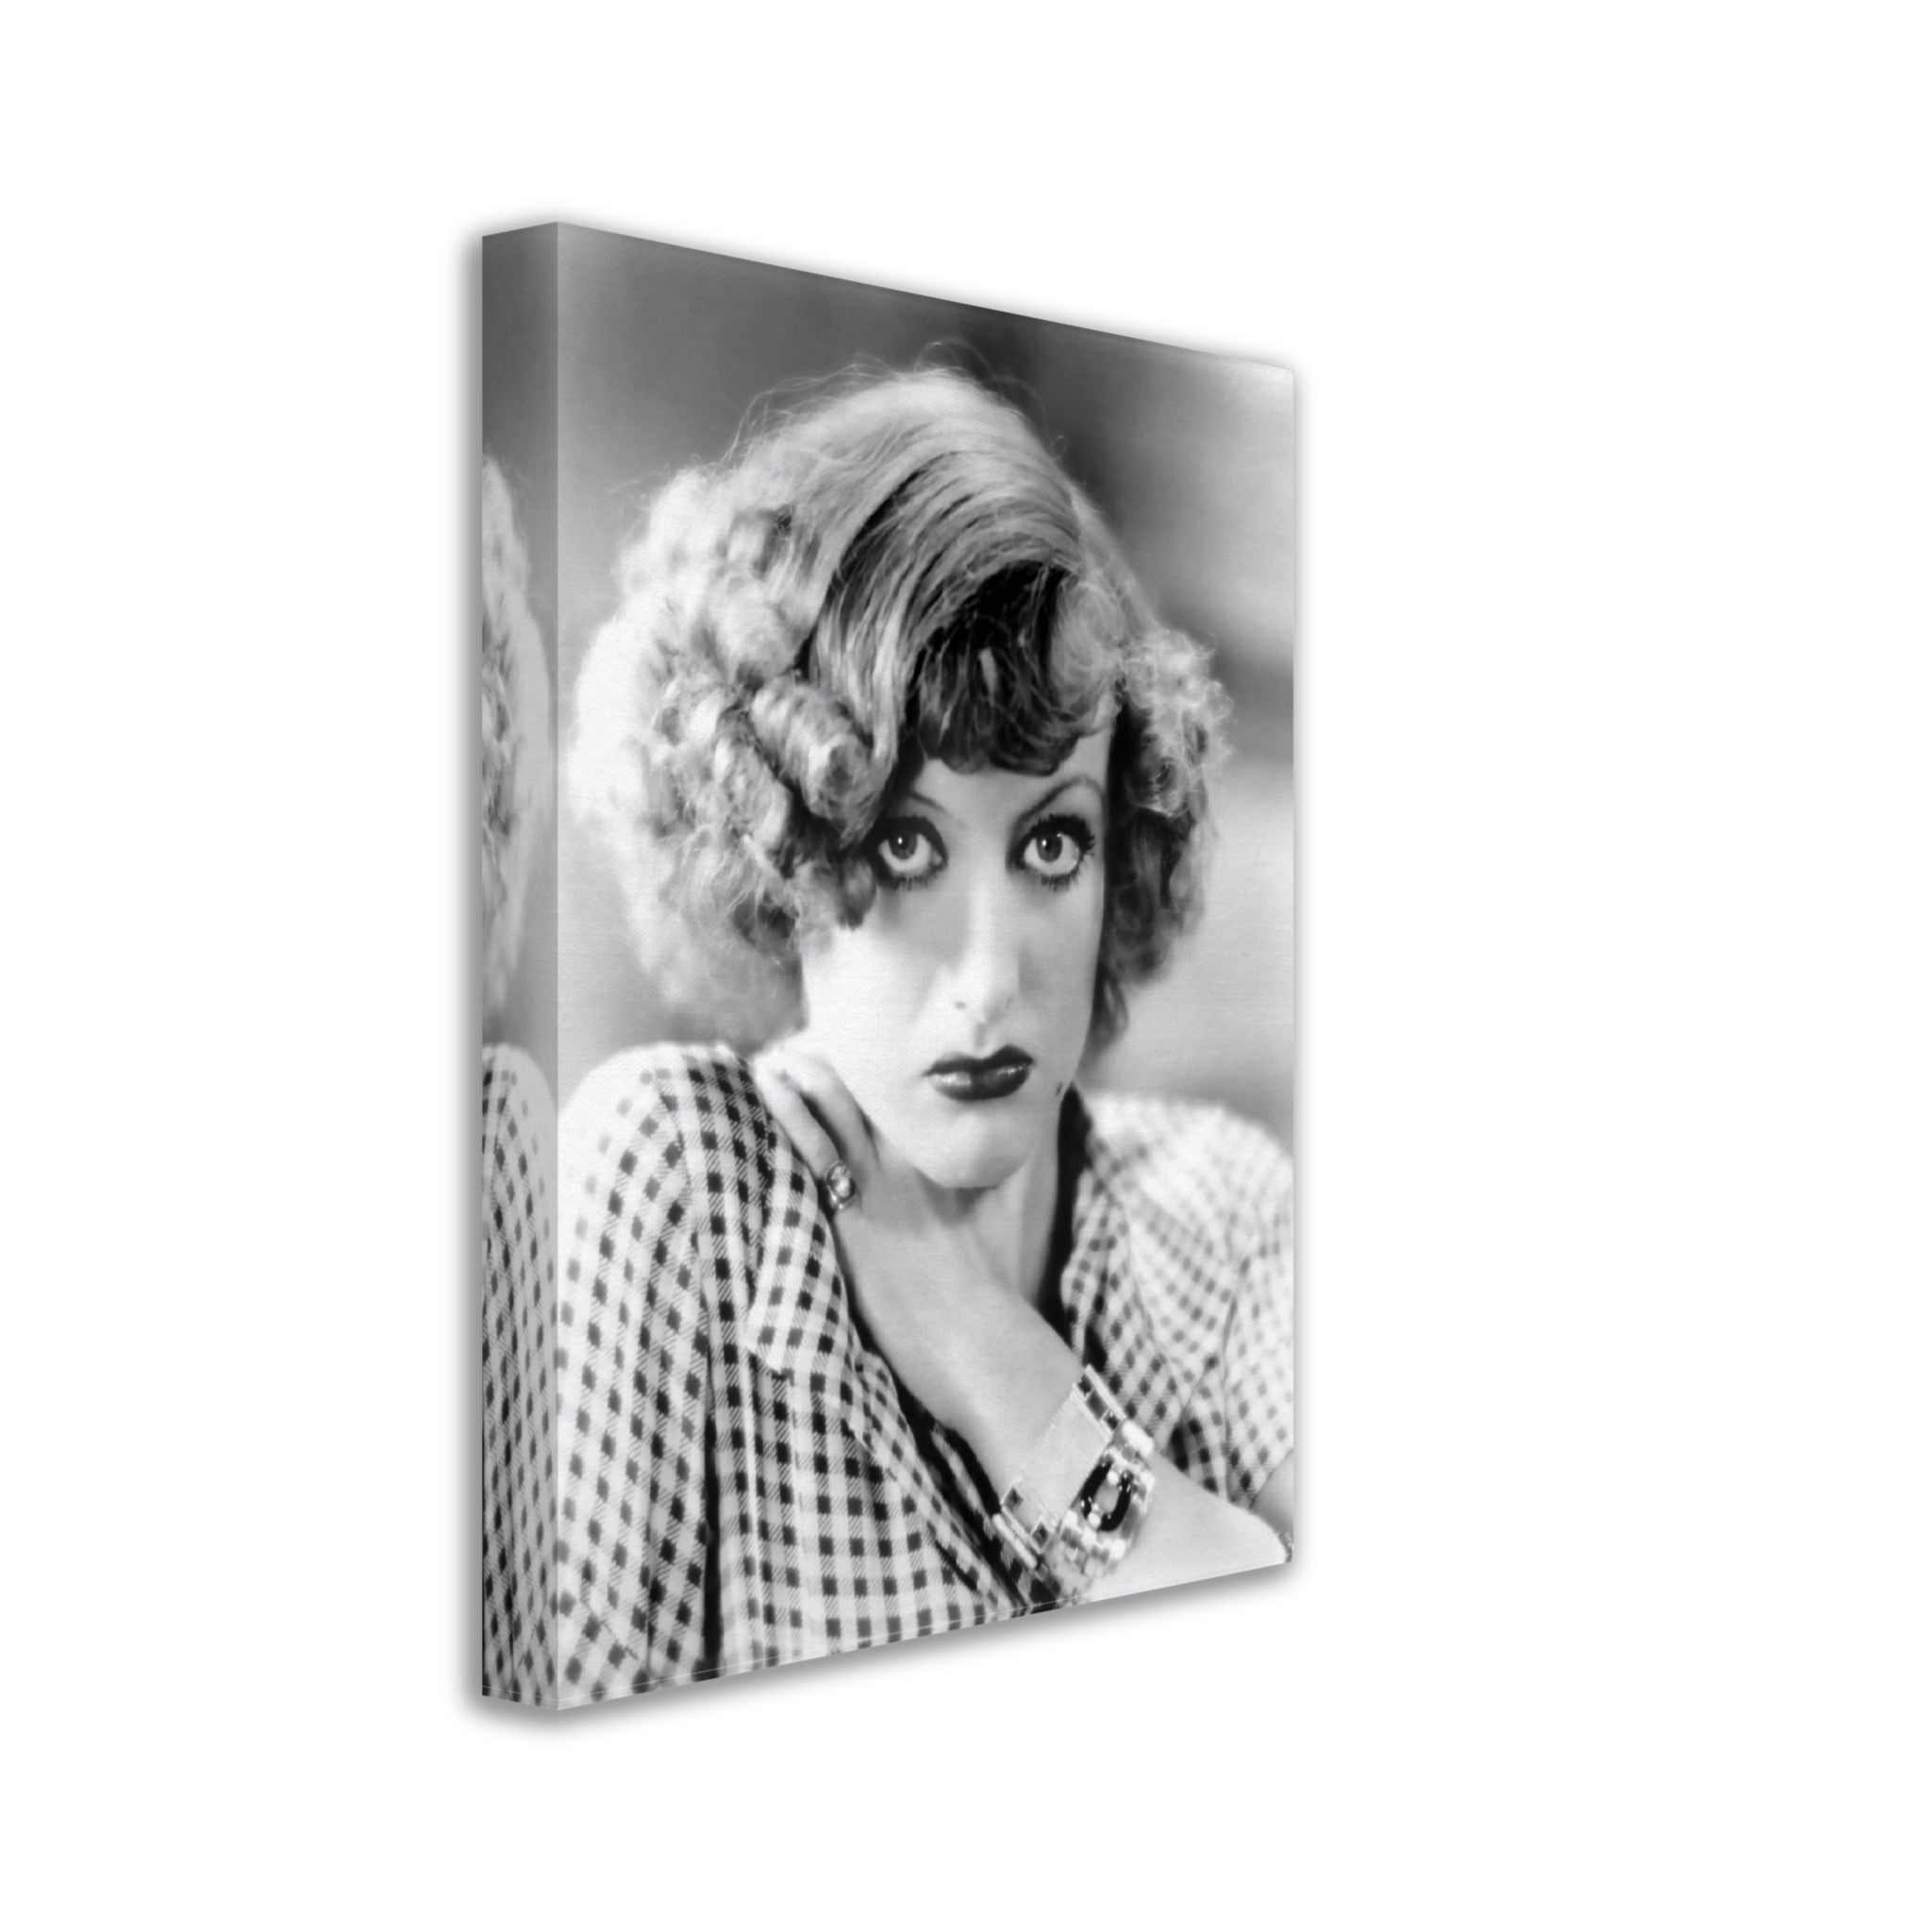 Joan Crawford Canvas, Baby Jane Star, Vintage Photo - Iconic Joan Crawford Canvas Print - Hollywood Silver Screen Star - WallArtPrints4U